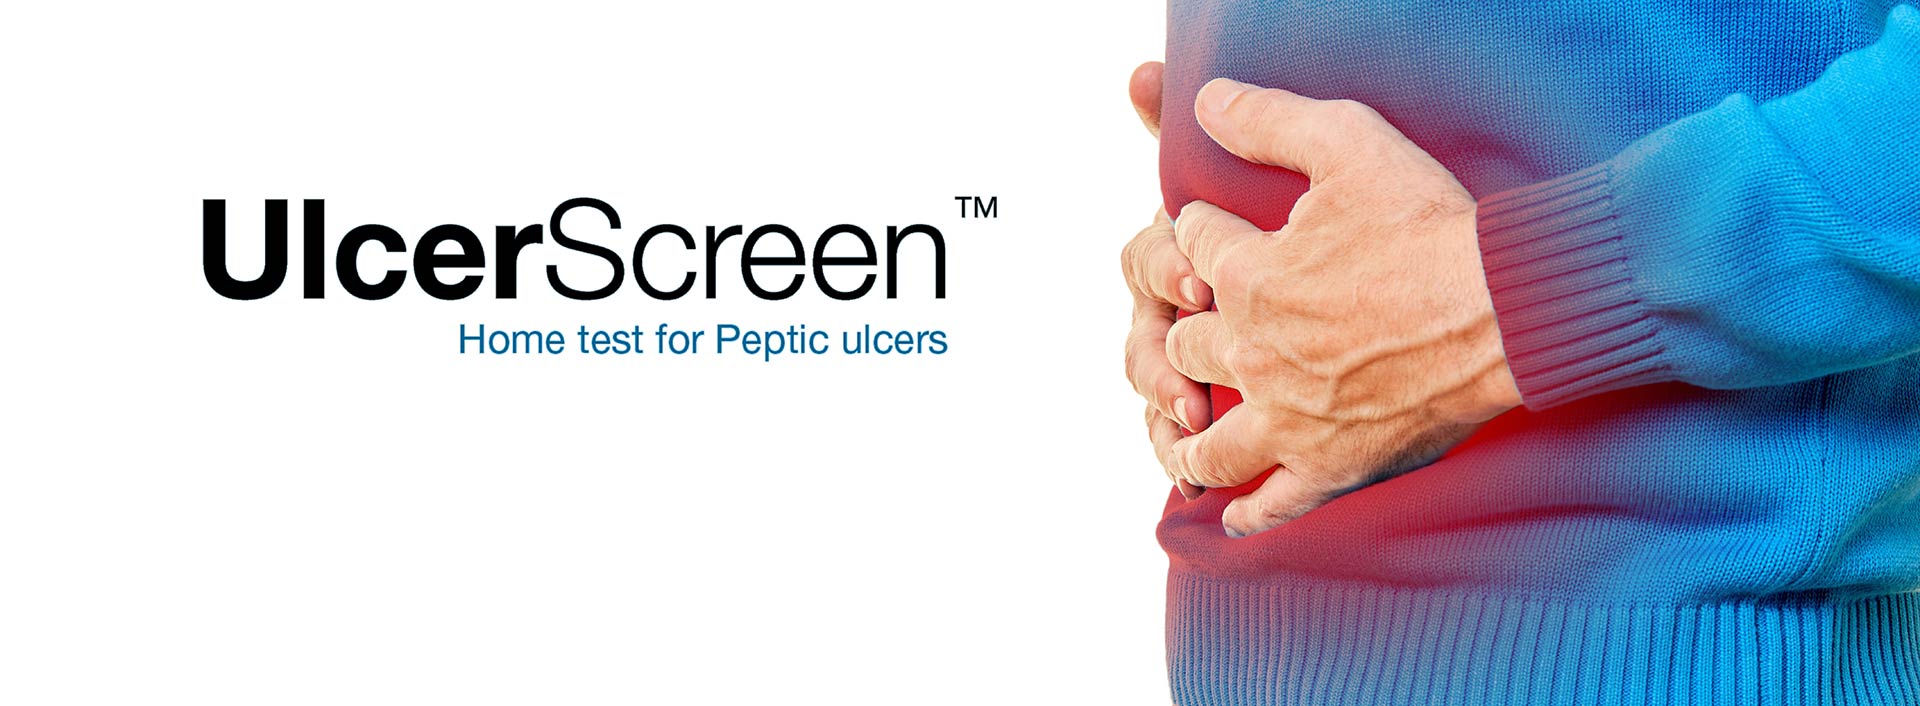 UlcerScreen